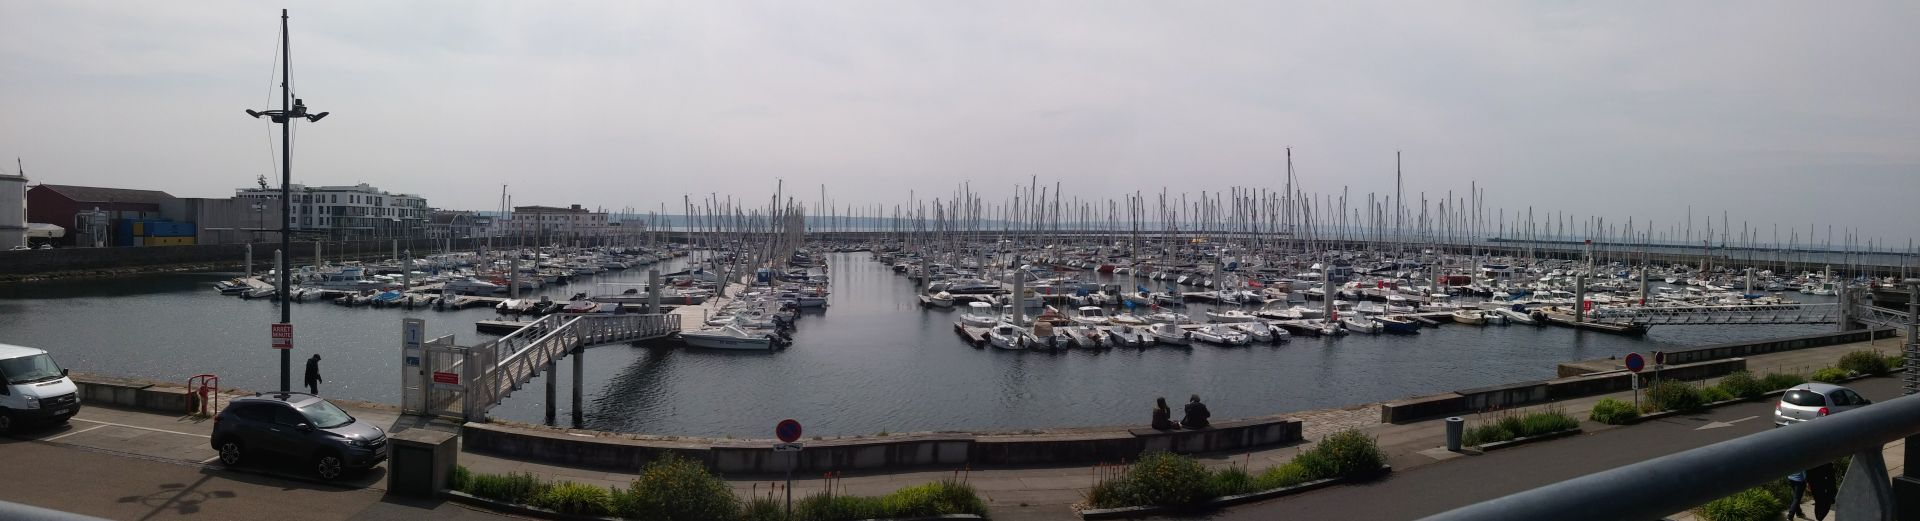 The marina in Brest